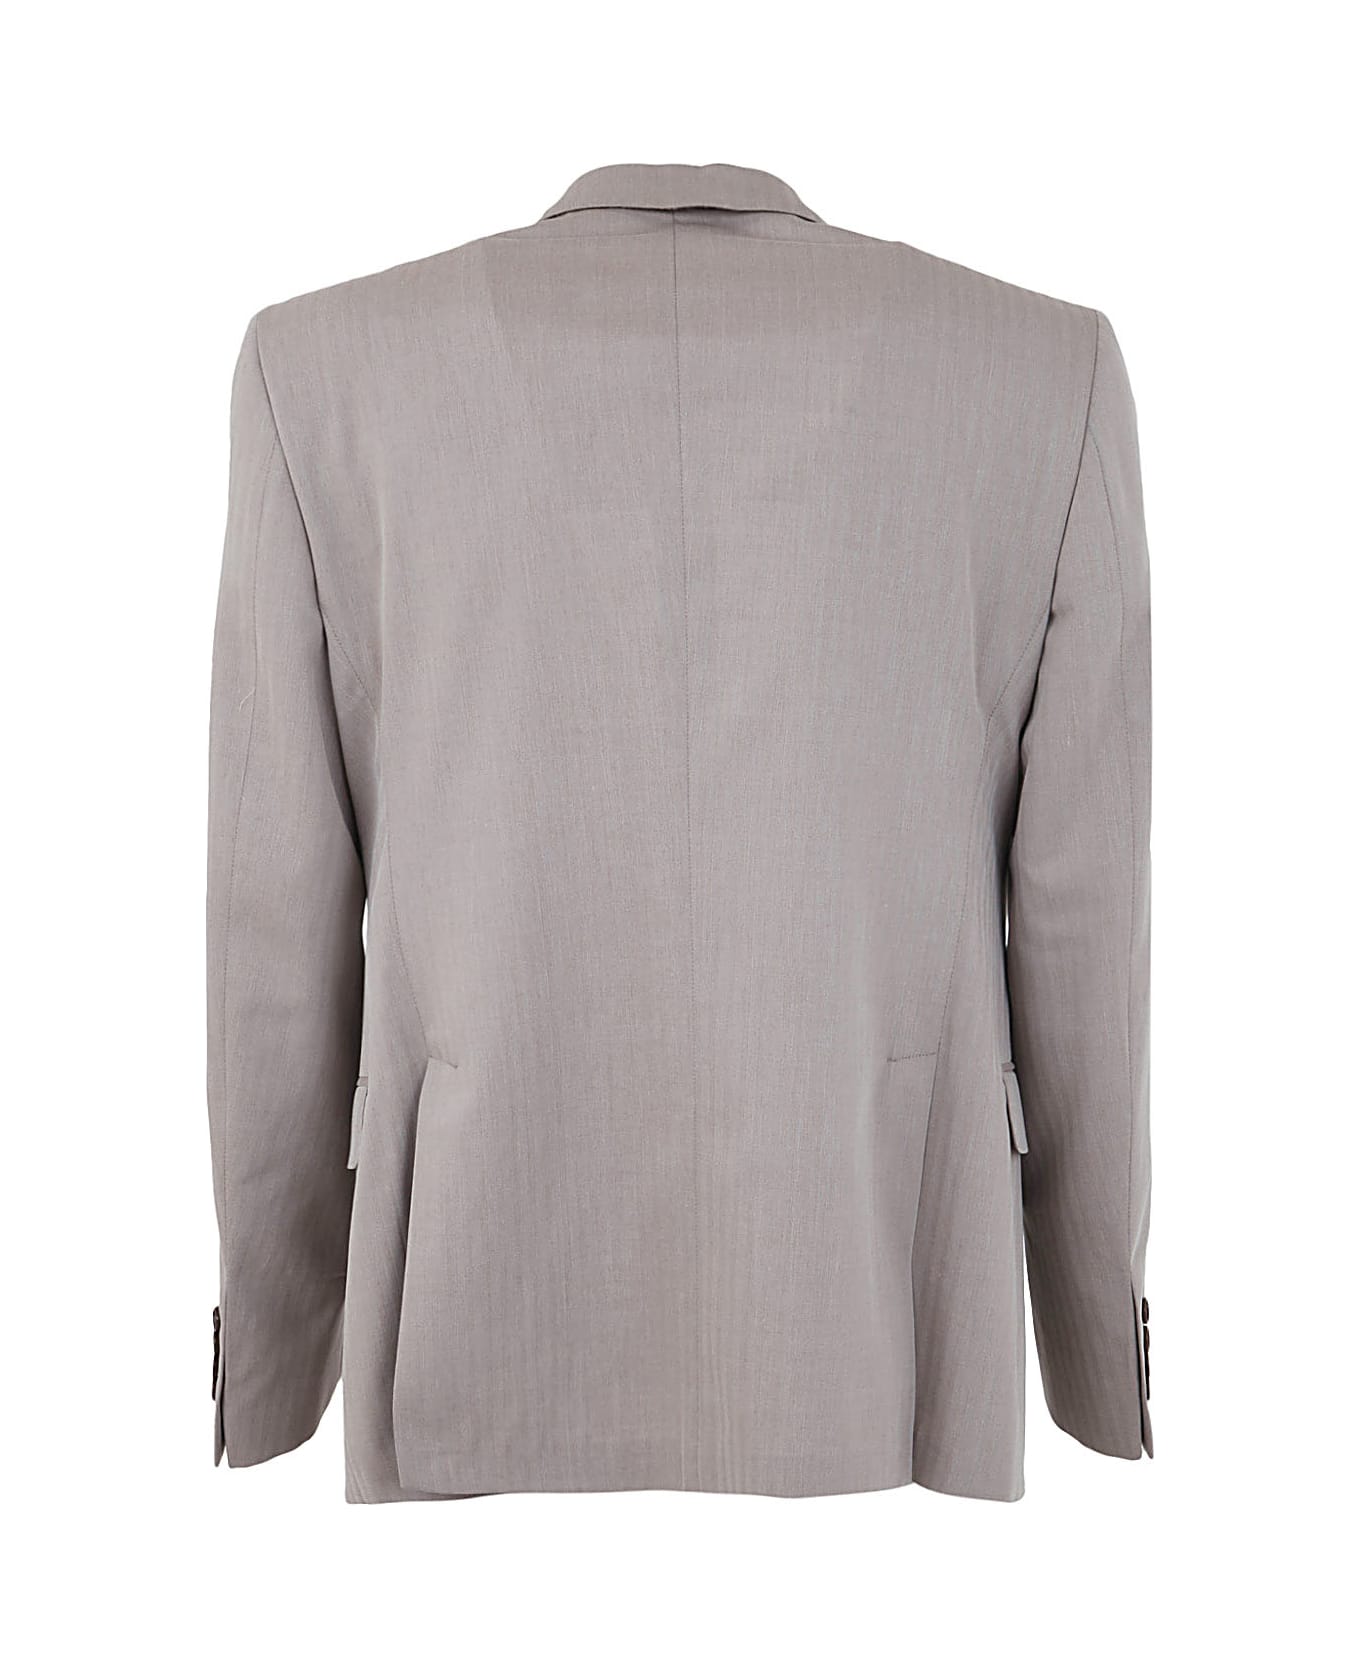 Emporio Armani Suit - Beige スーツ